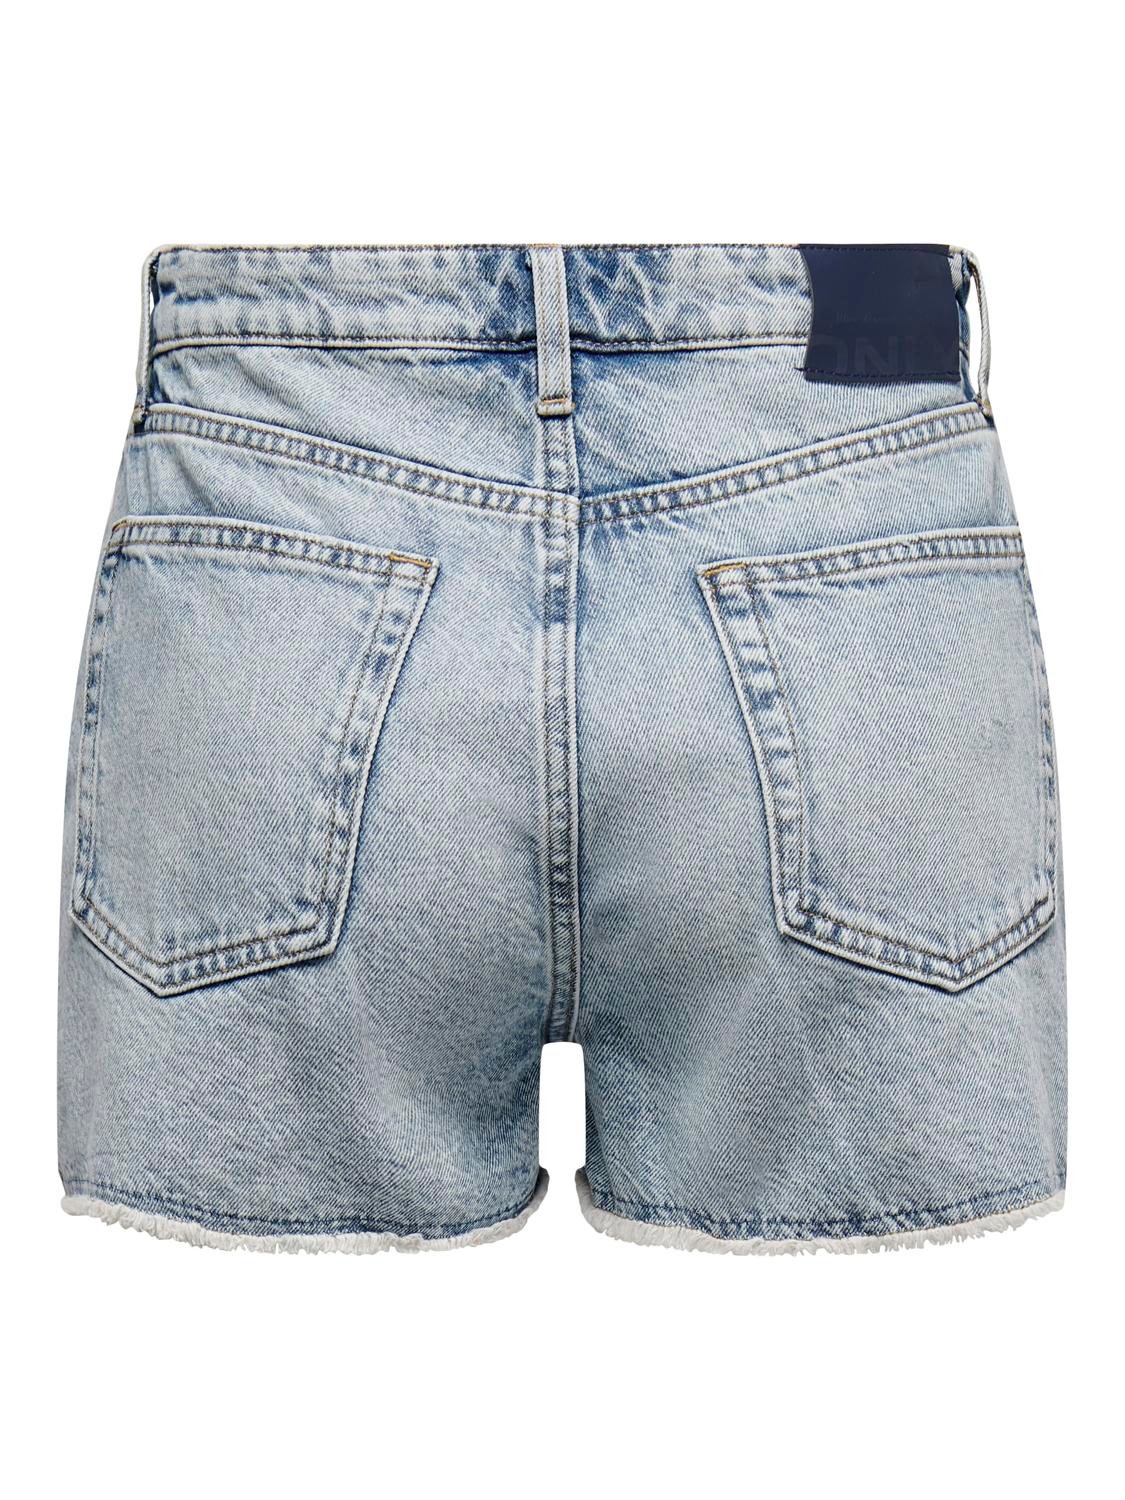 ONLY Shorts Regular Fit Taille haute Ourlé destroy -Light Blue Denim - 15226961